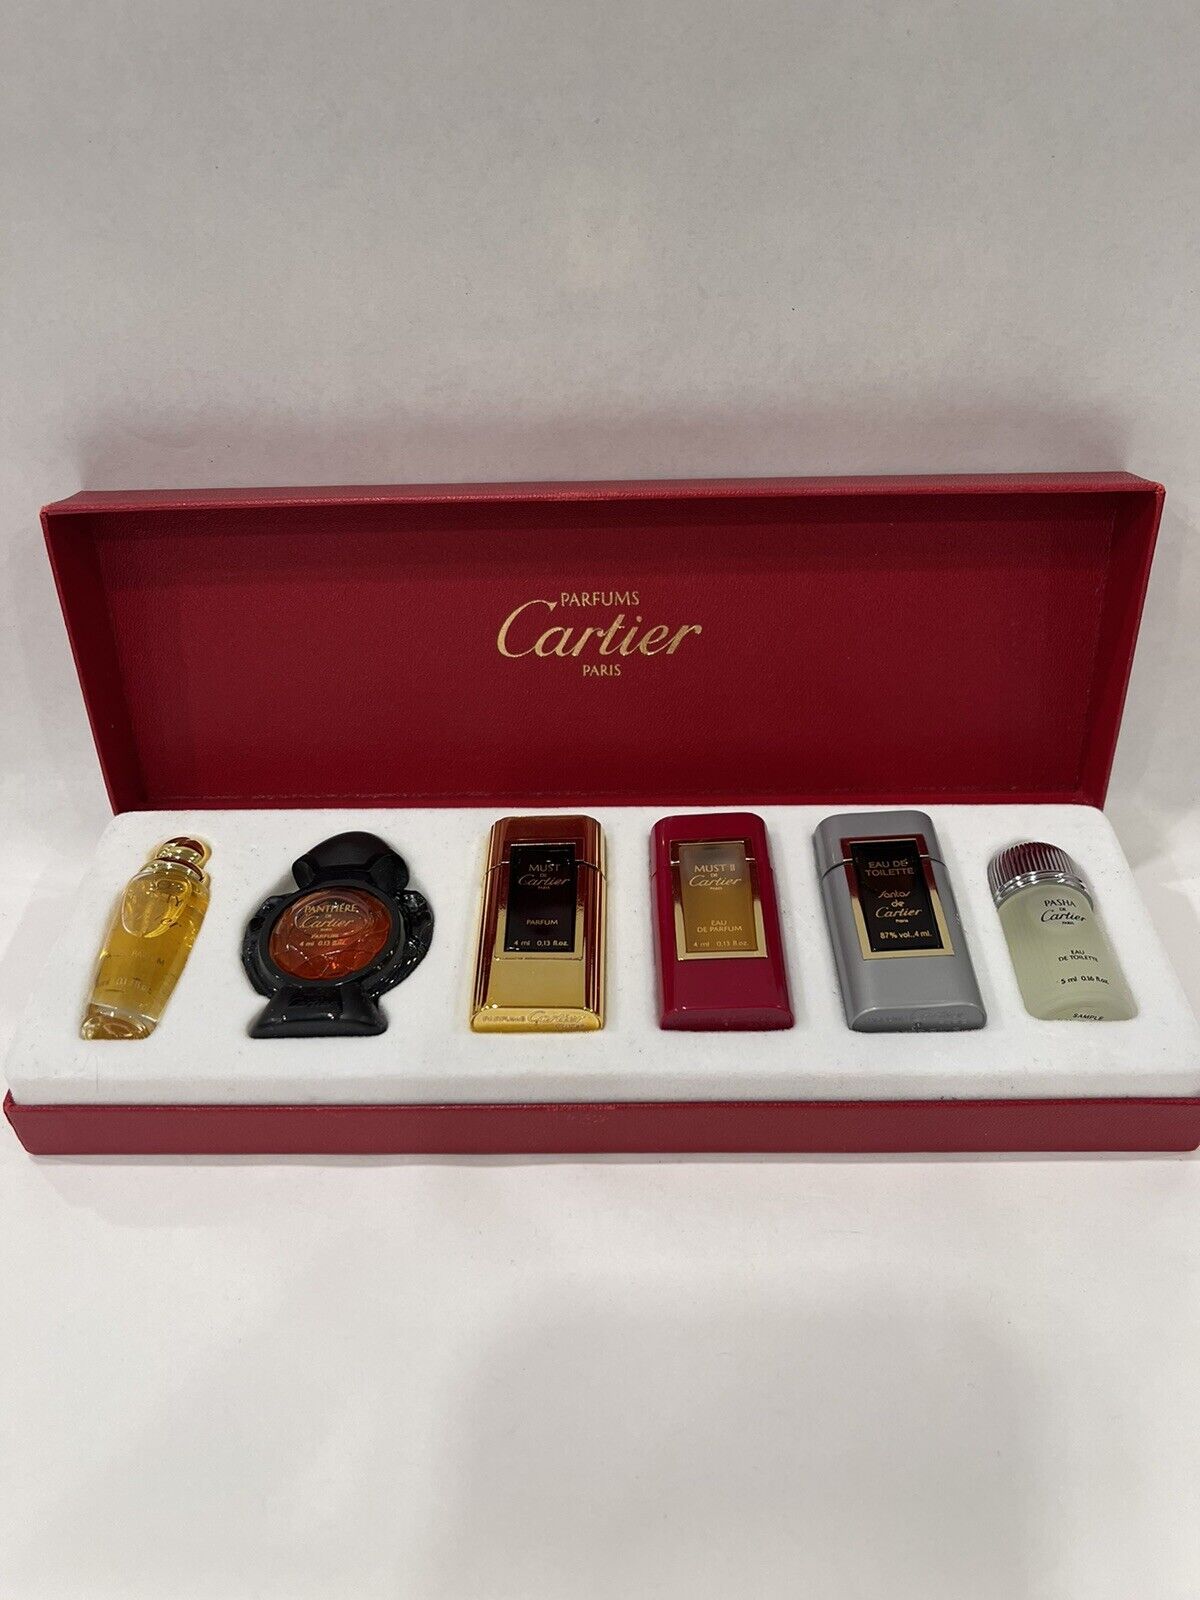 CARTIER VNTG RARE 1960s  Paris Designer French Perfume  CASE Mini Collectables